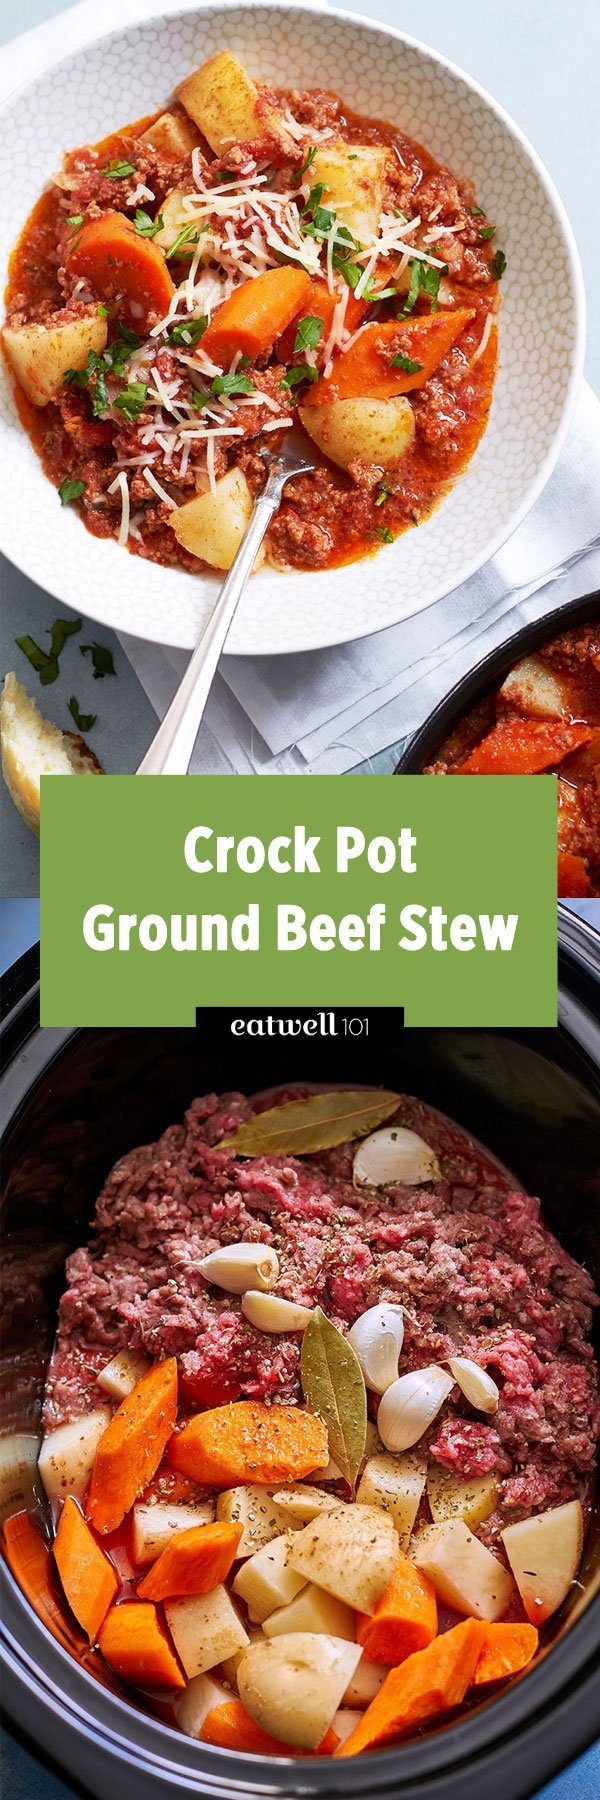 Crockpot Ground Beef
 Crock Pot Ground Beef Stew Potato and Carrot — Eatwell101